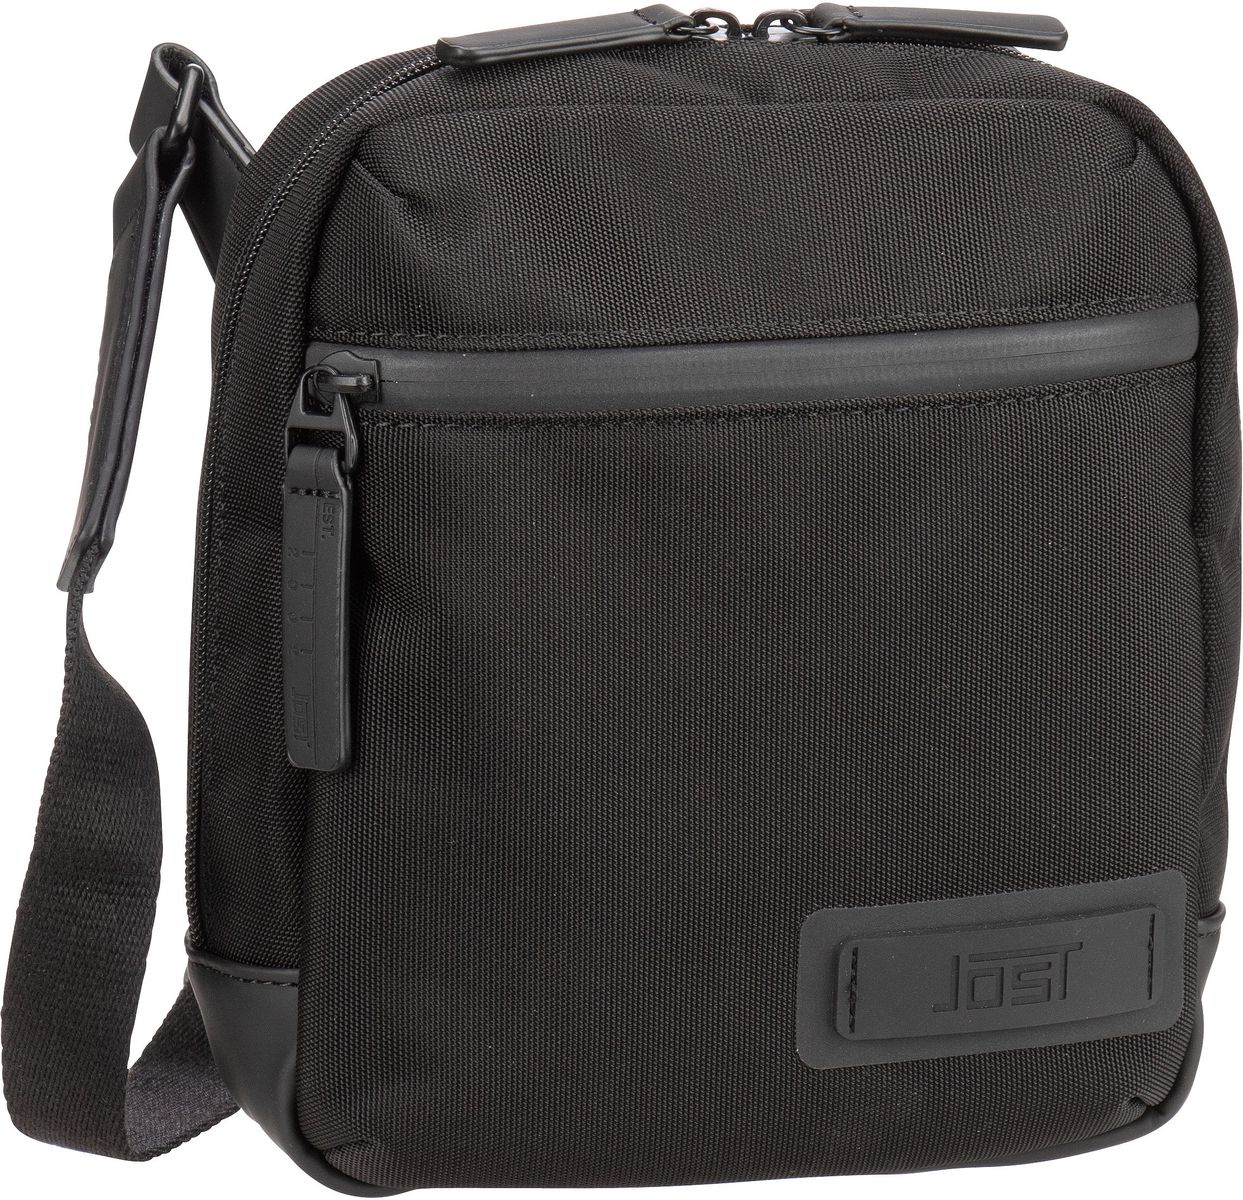 Jost Tallinn Shoulder Bag Zip XS - Black